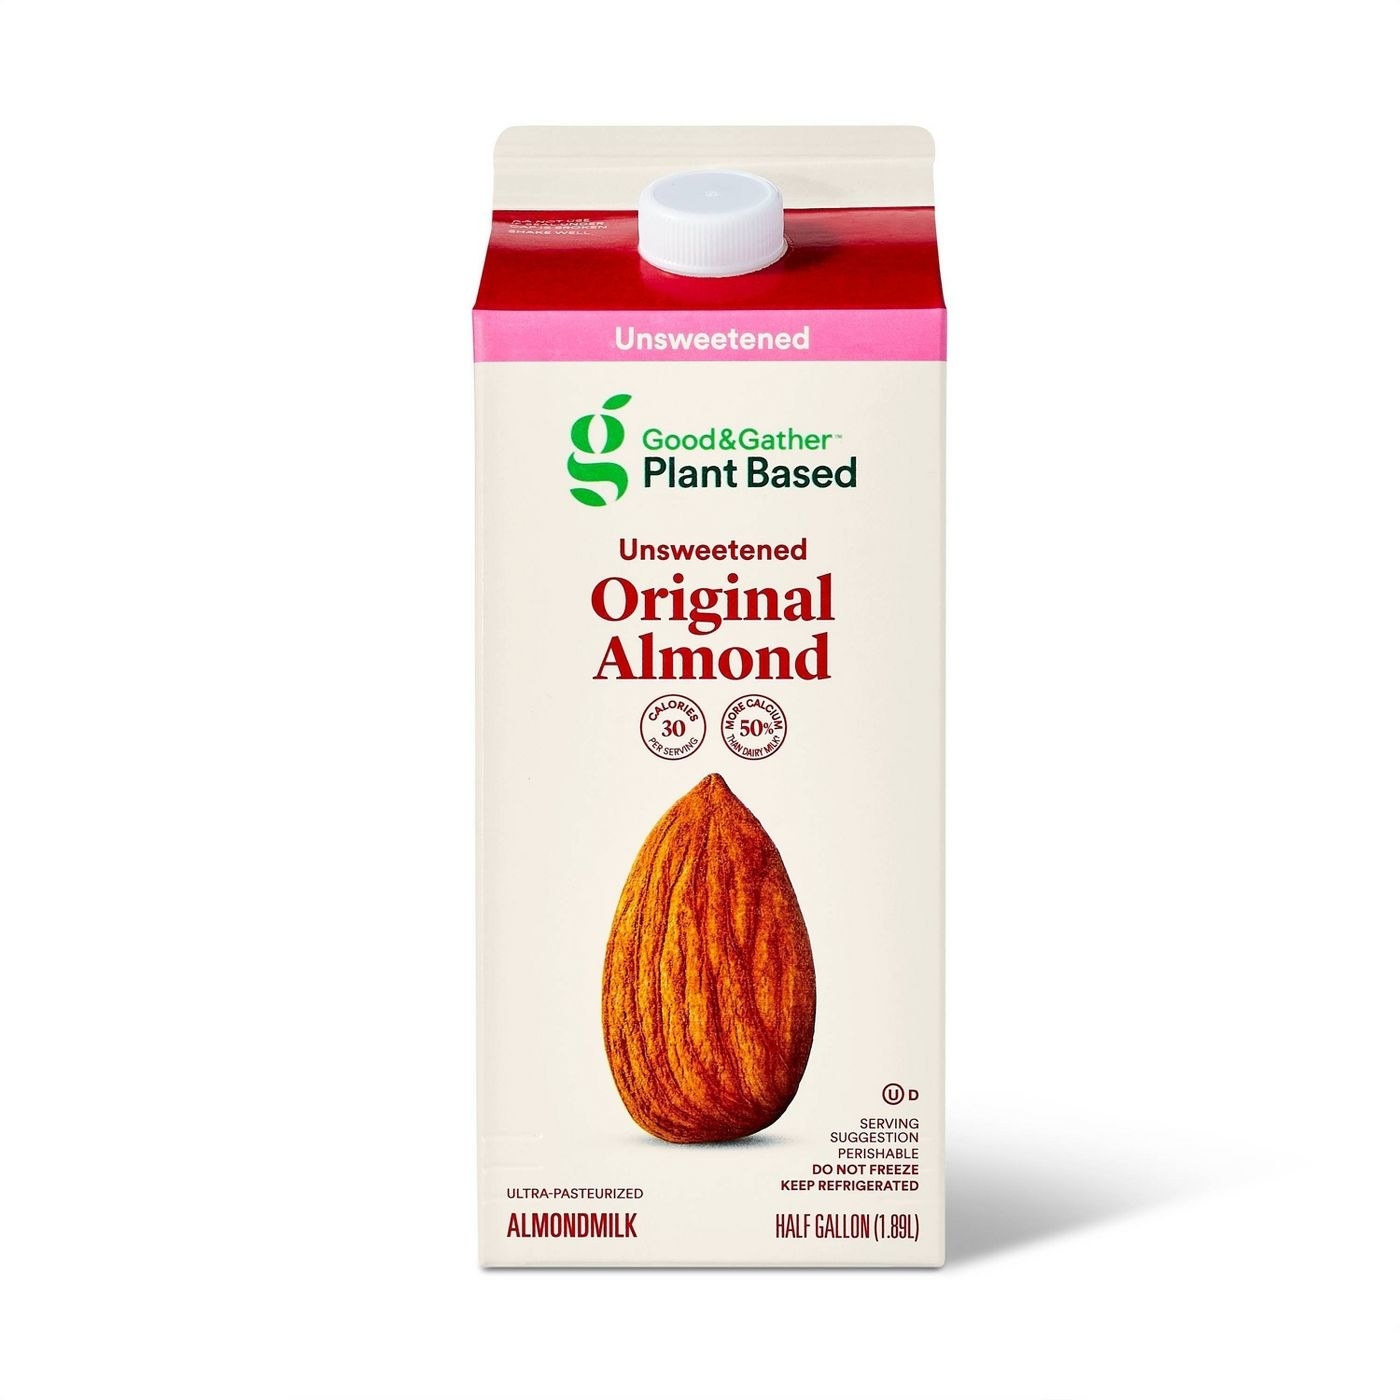 the unsweetened almond milk